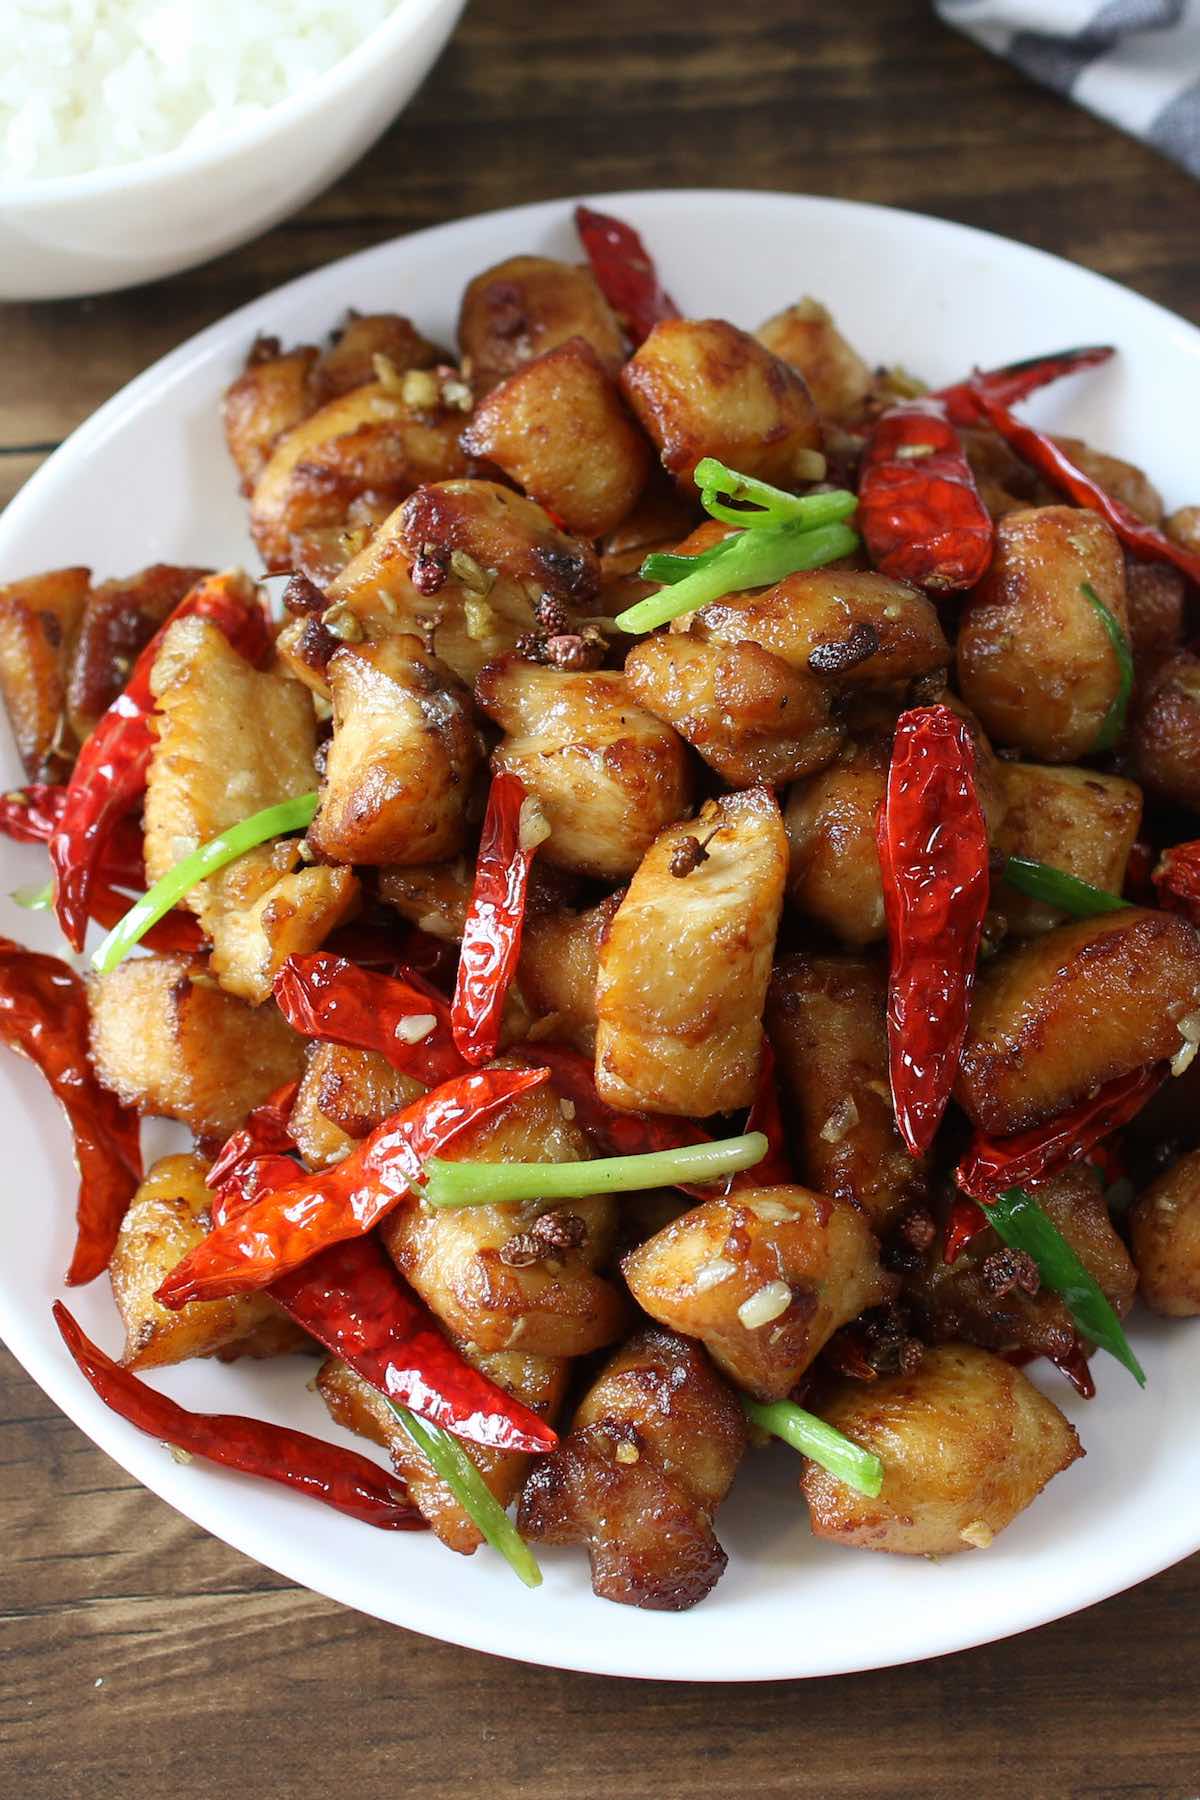 Szechuan chicken cooked with whole Szechuan peppercorns on a serving plate.